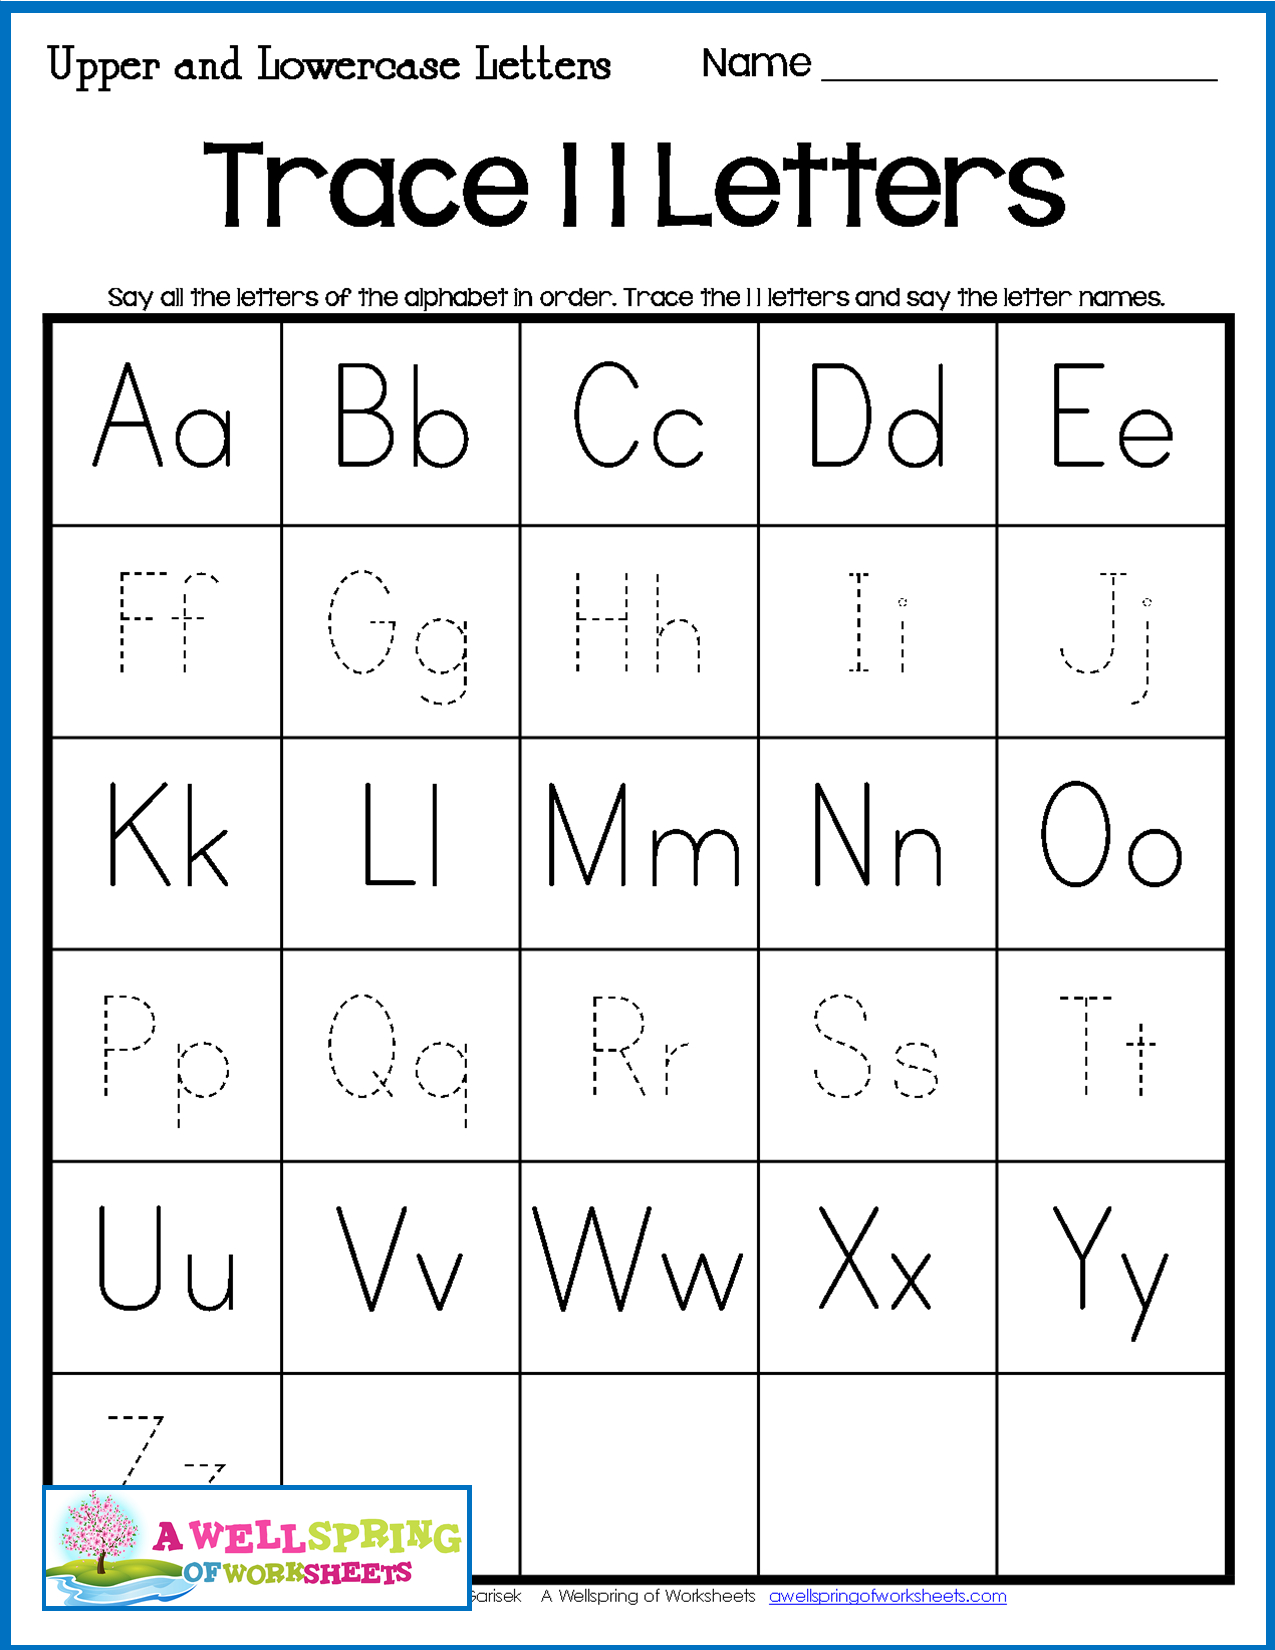 Tracing Letters Name - TracingLettersWorksheets.com